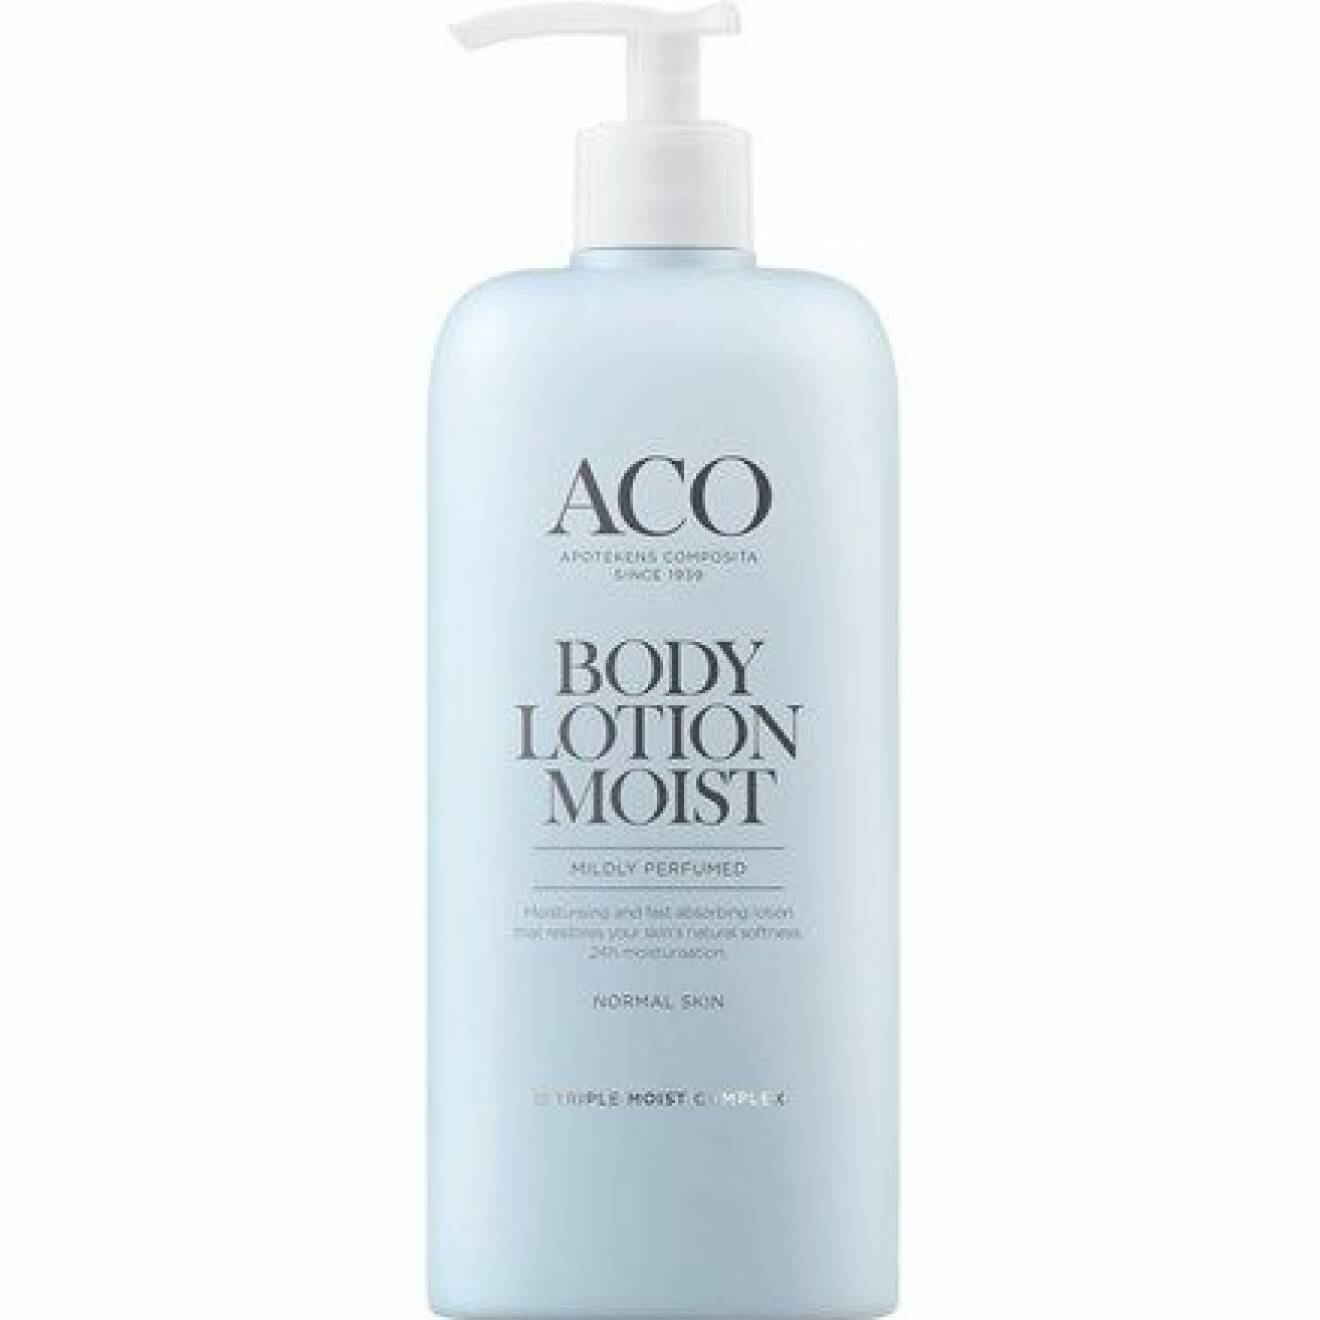 Body lotion moist från ACO